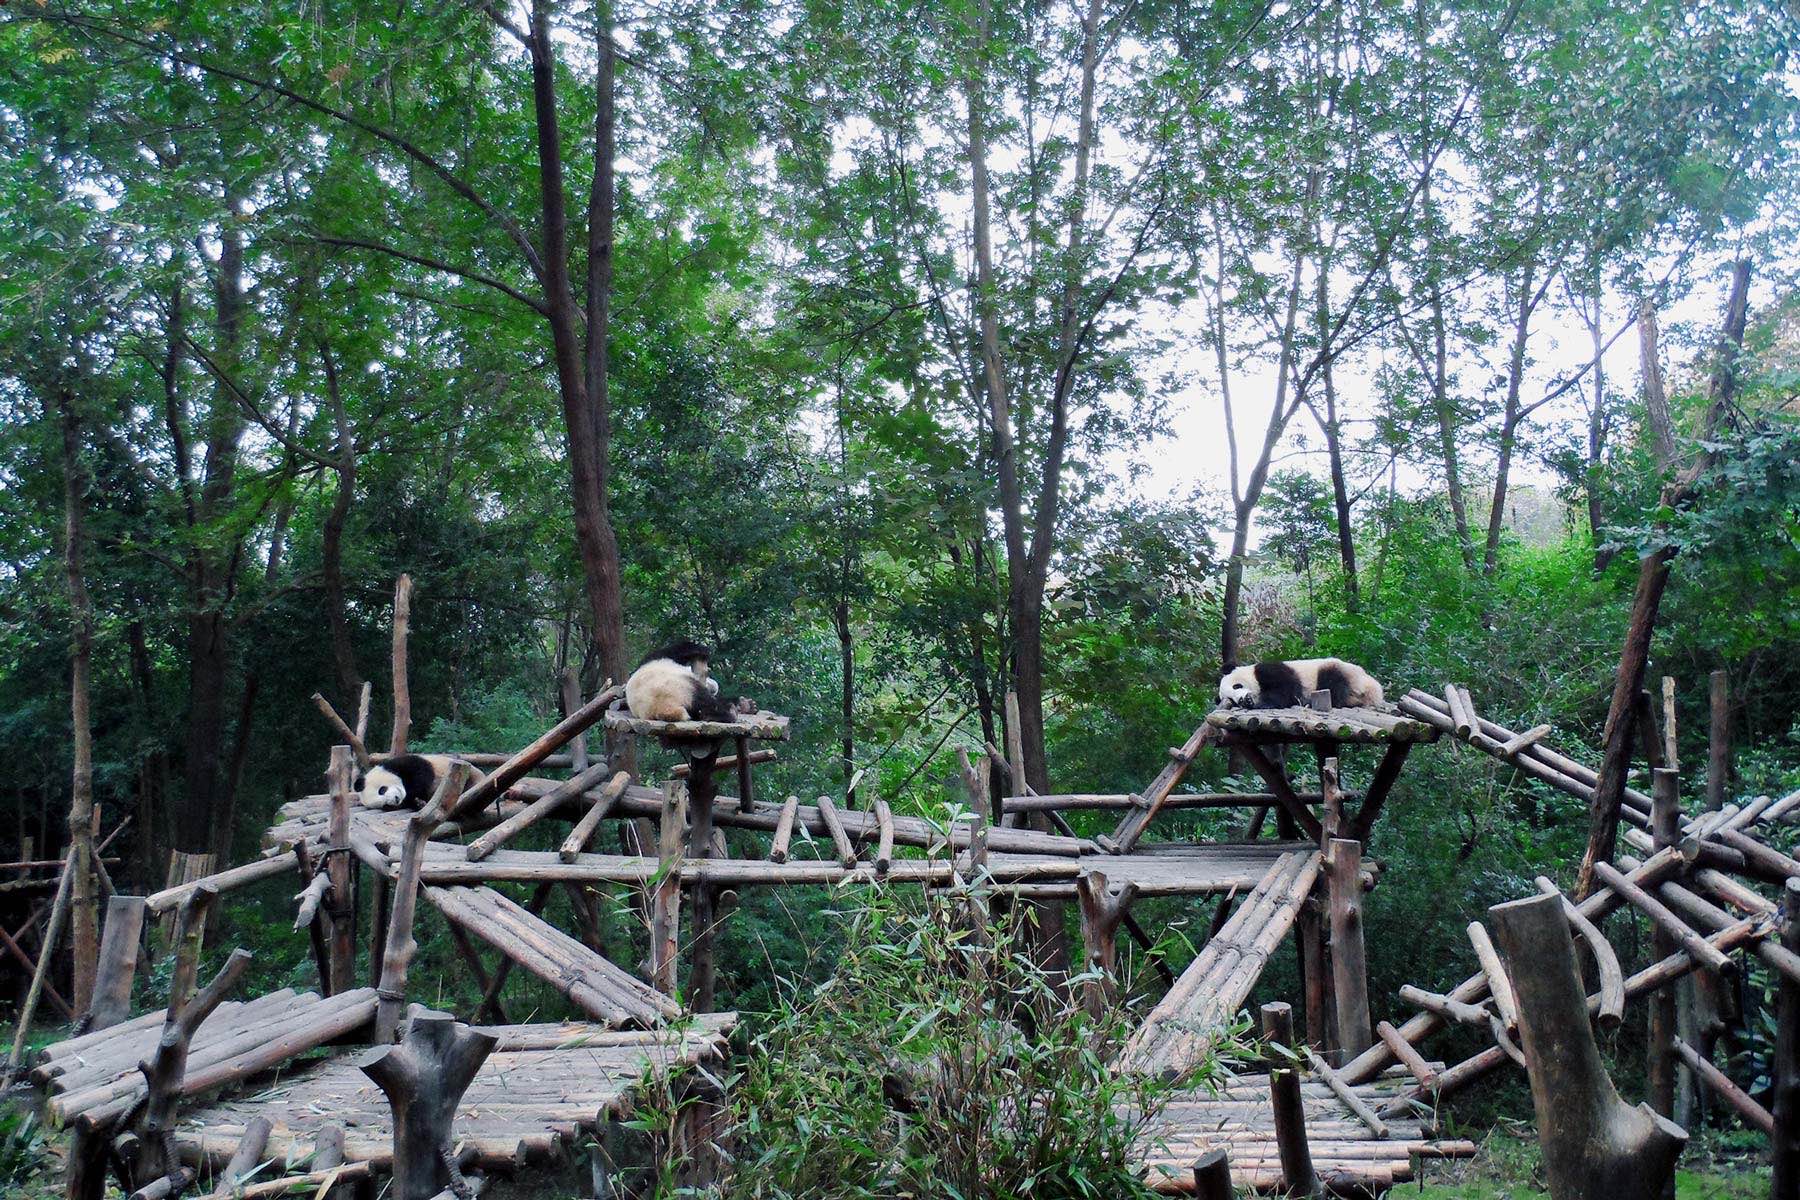 Chengdu Research Base of Giant Panda Breeding sichuan china 成都大熊猫繁育研究基地 四川 中国